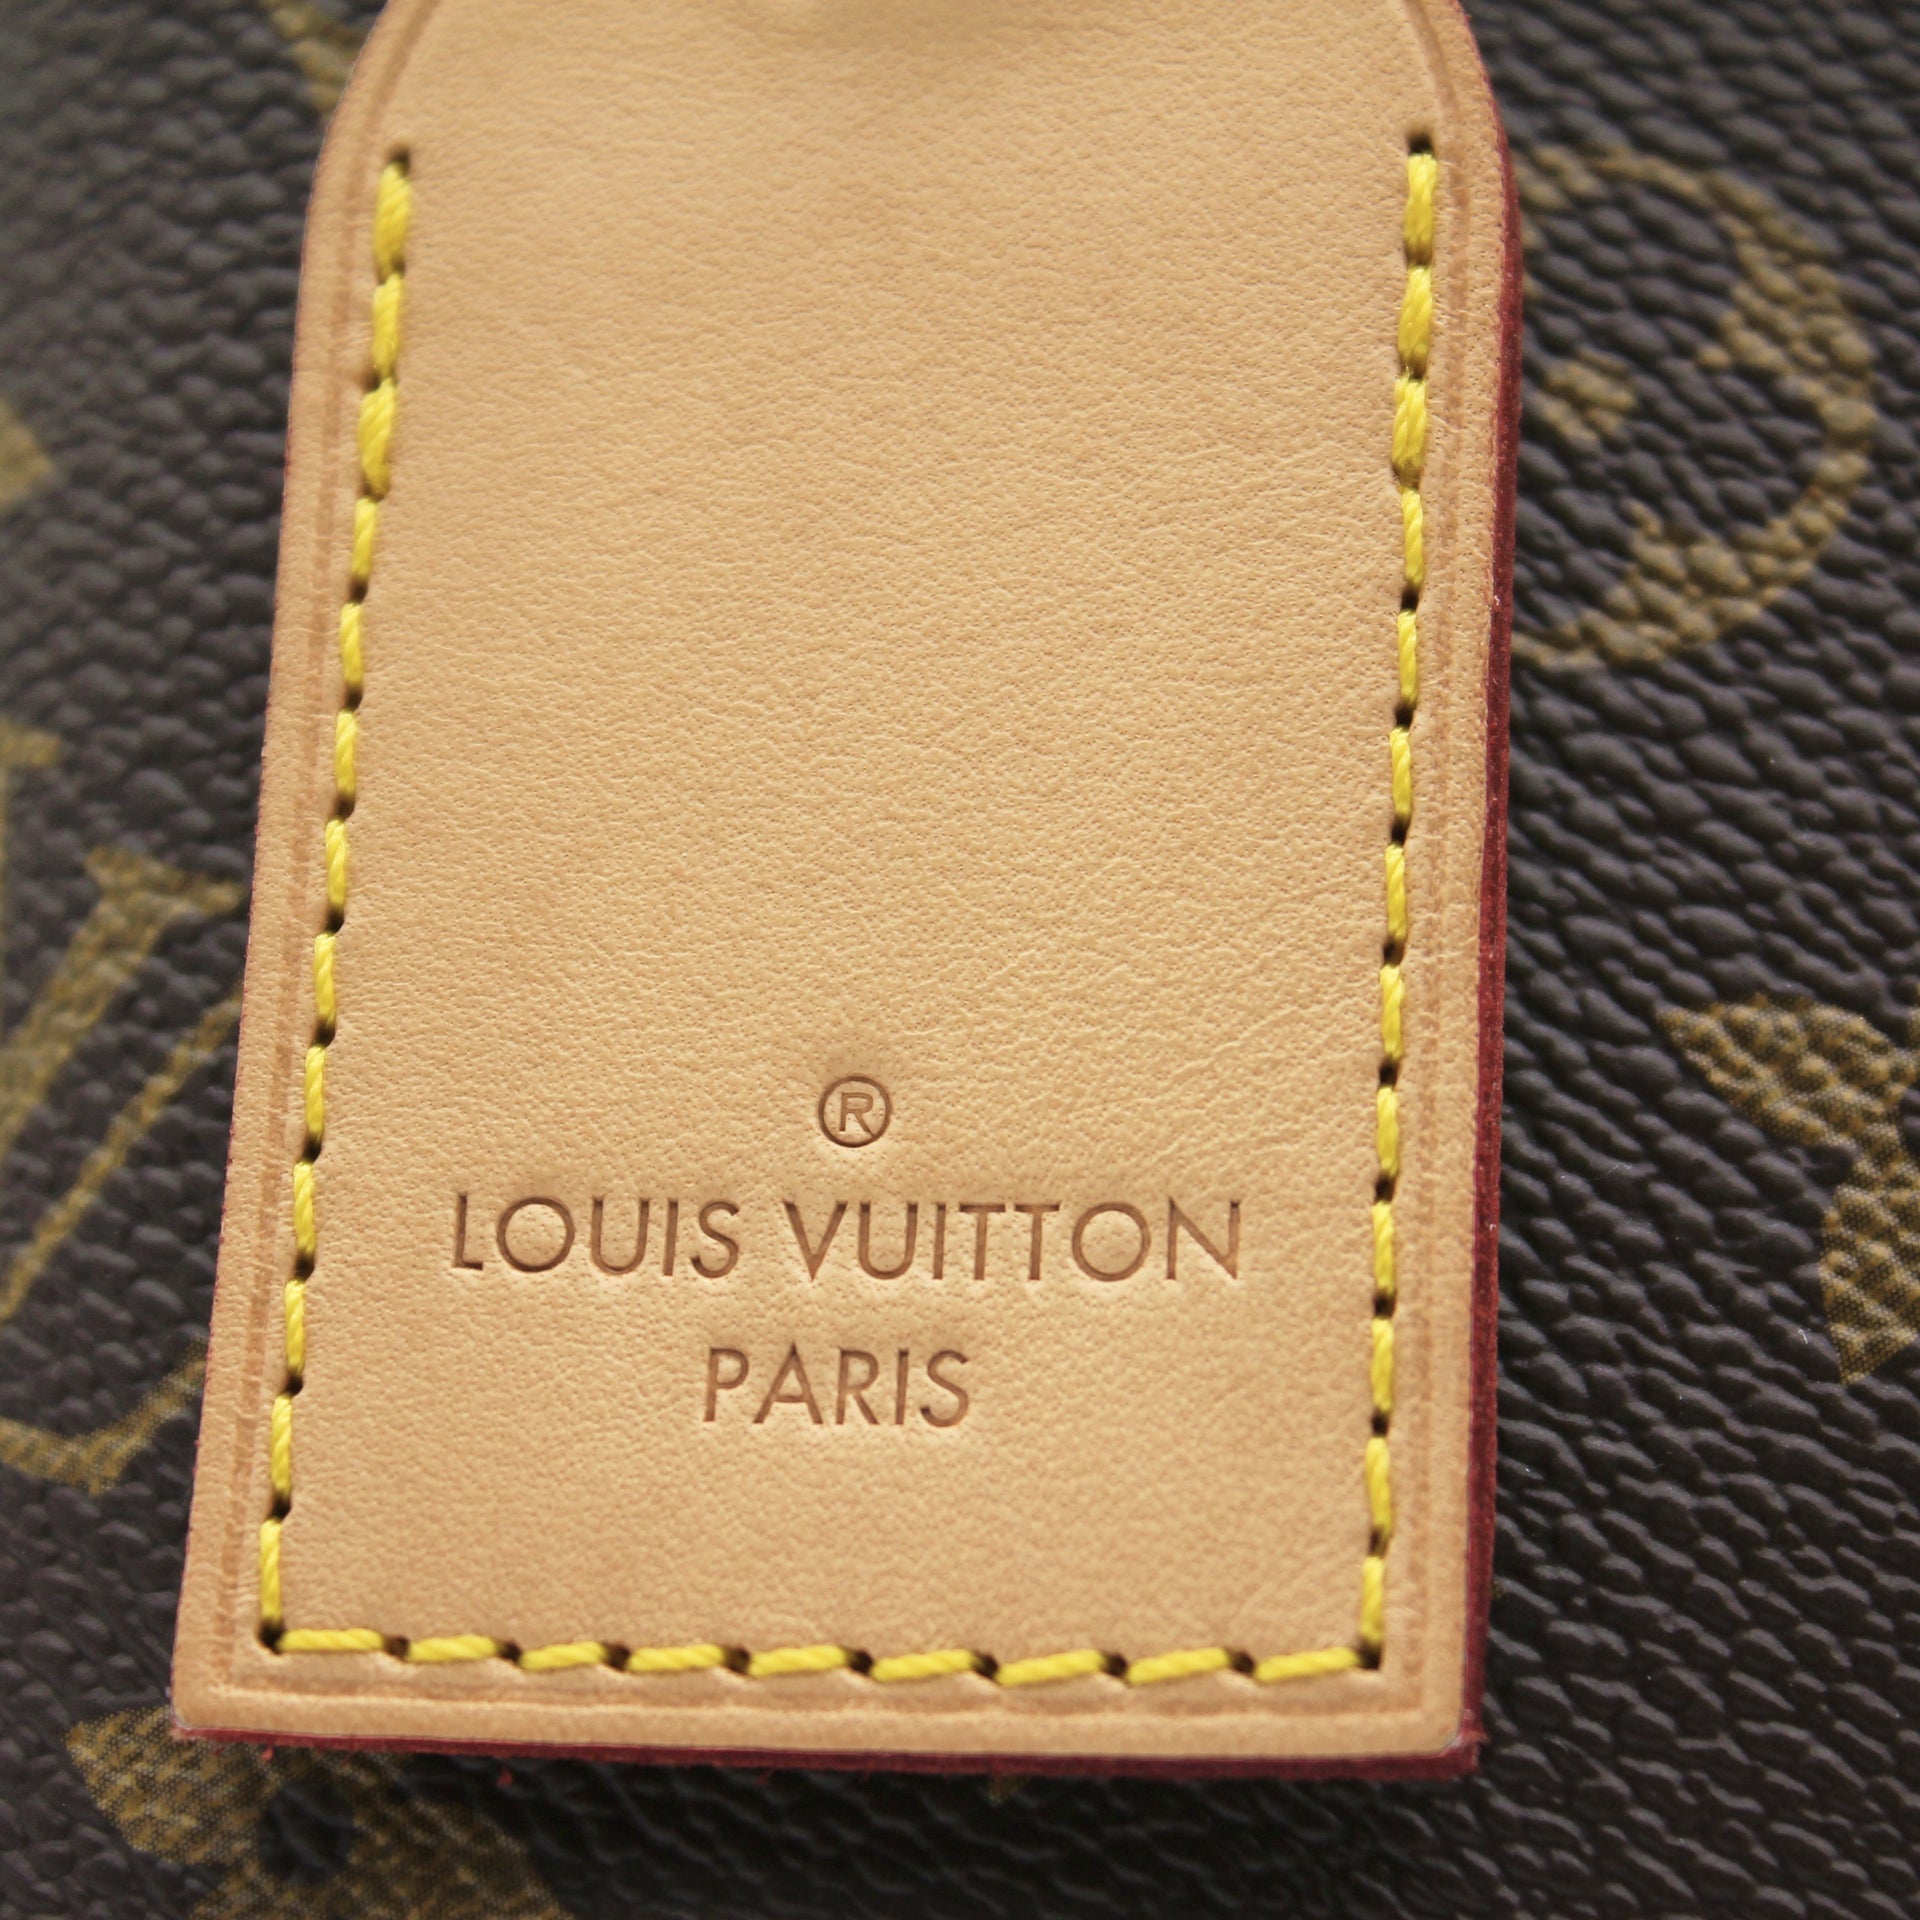 Name of bag? : r/Louisvuitton